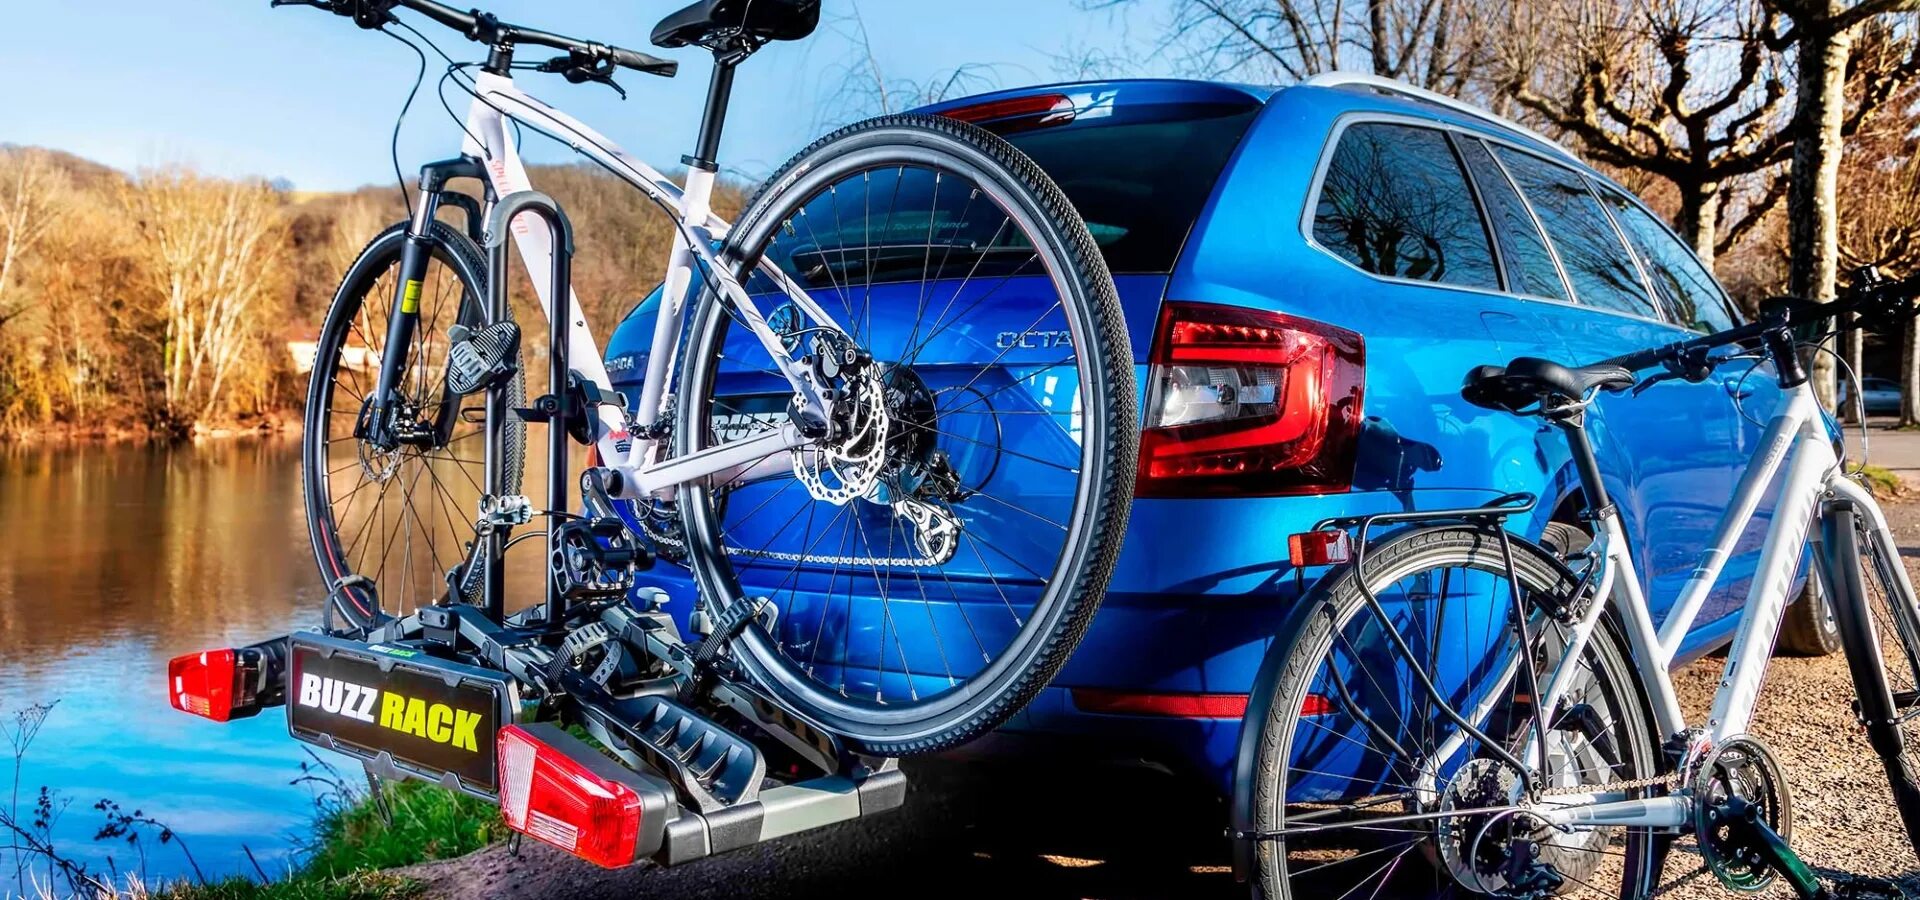 Us best bike. Багажник для перевозки велосипеда. Приспособления для перевозки велосипедов. Перевозка велосипедов. Машина велосипед.